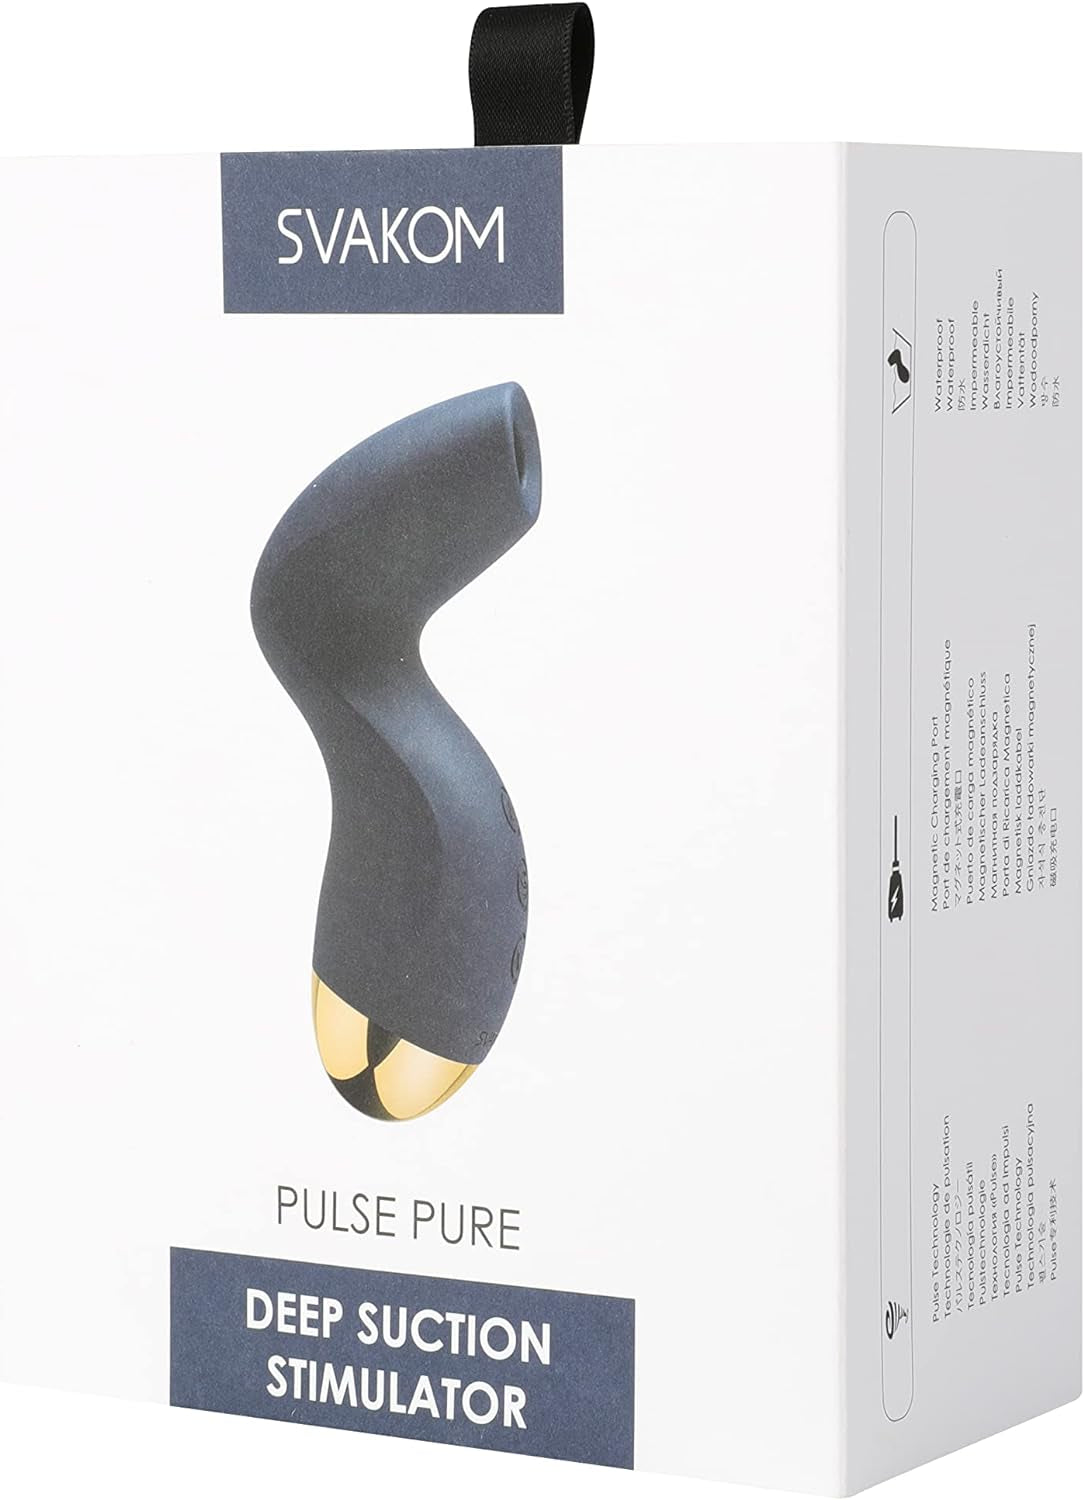 The Svakom Pulse Pure Clit Sucker Packaging